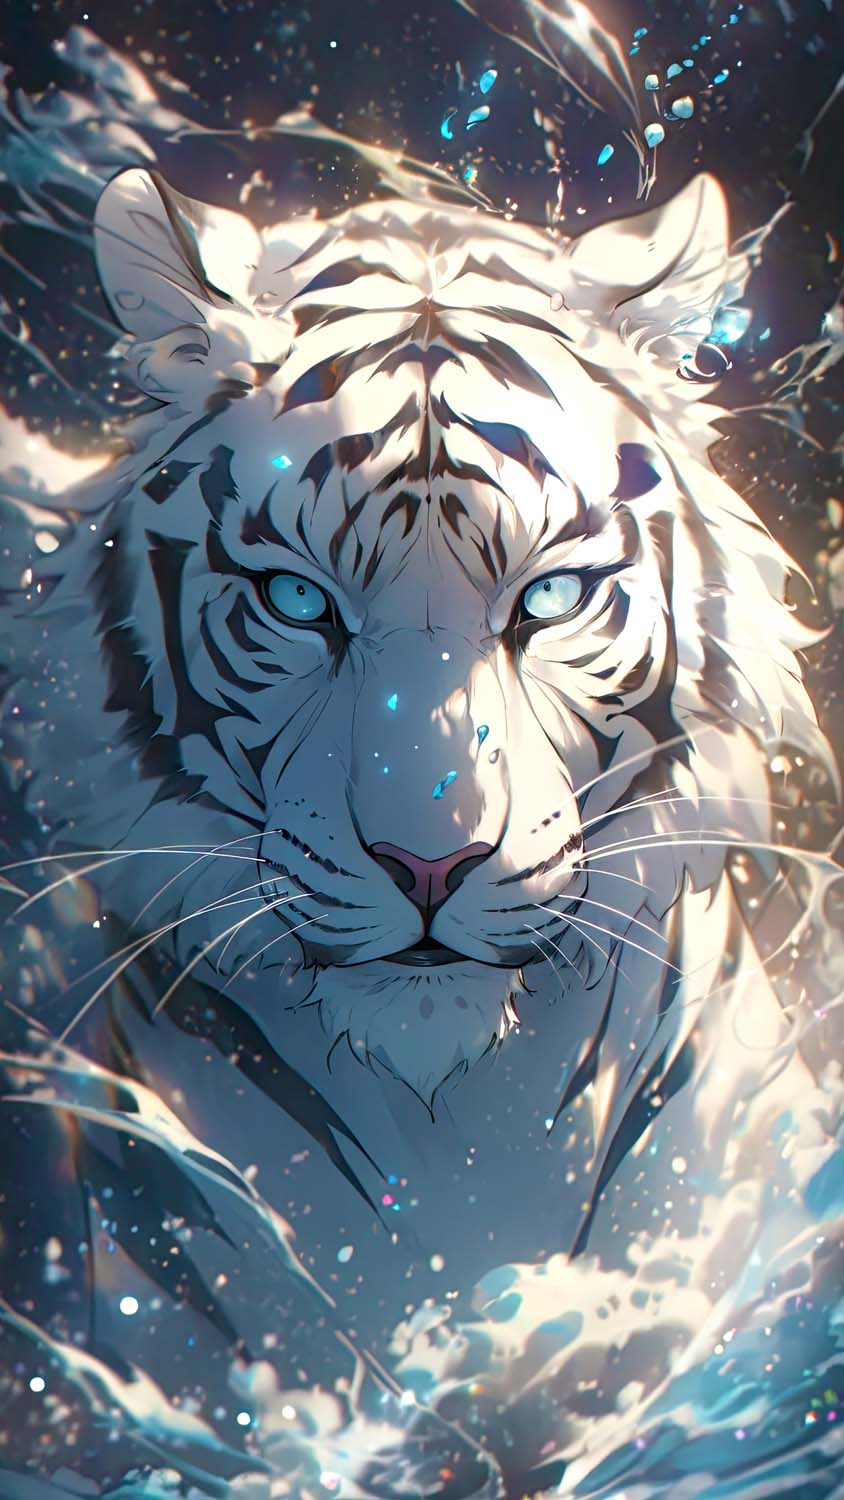 Premium Photo | Fierce Animation Unleashing the Anime Tiger's Full Speed  Rage